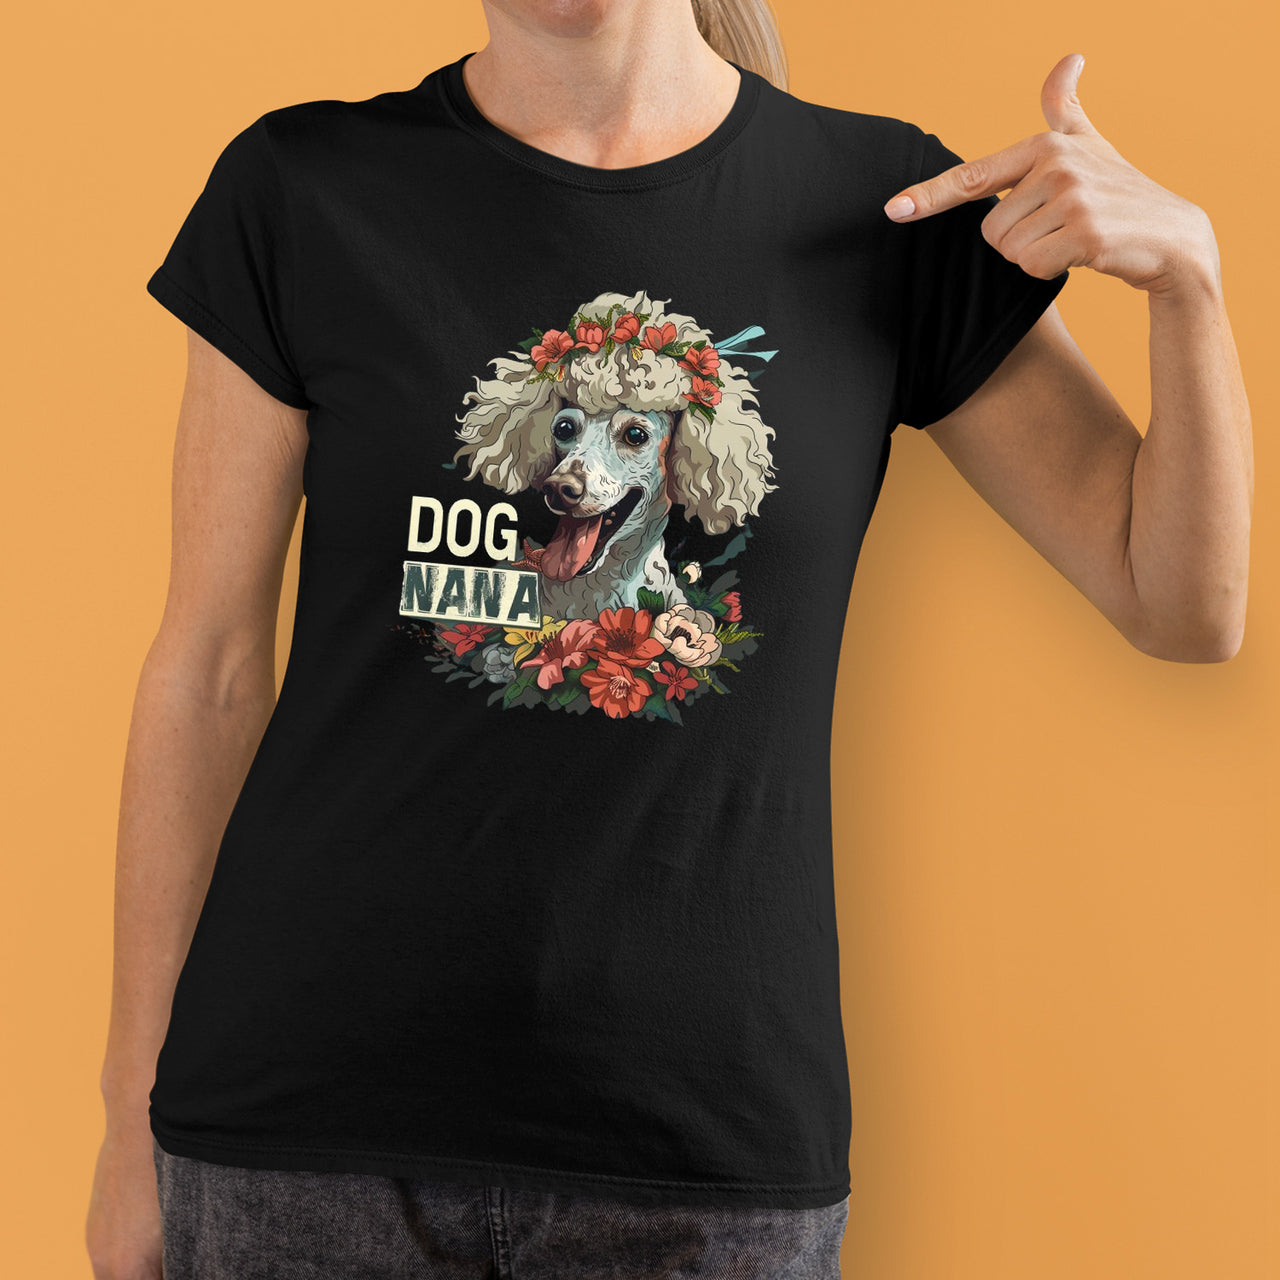 Poodle Dog T-shirt, Pet Lover Shirt, Dog Lover Shirt, Dog Nana  T-Shirt, Dog Owner Shirt, Gift For Dog Grandma, Funny Dog Shirts, Women Dog T-Shirt, Mother's Day Gift, Dog Lover Wife Gifts, Dog Shirt